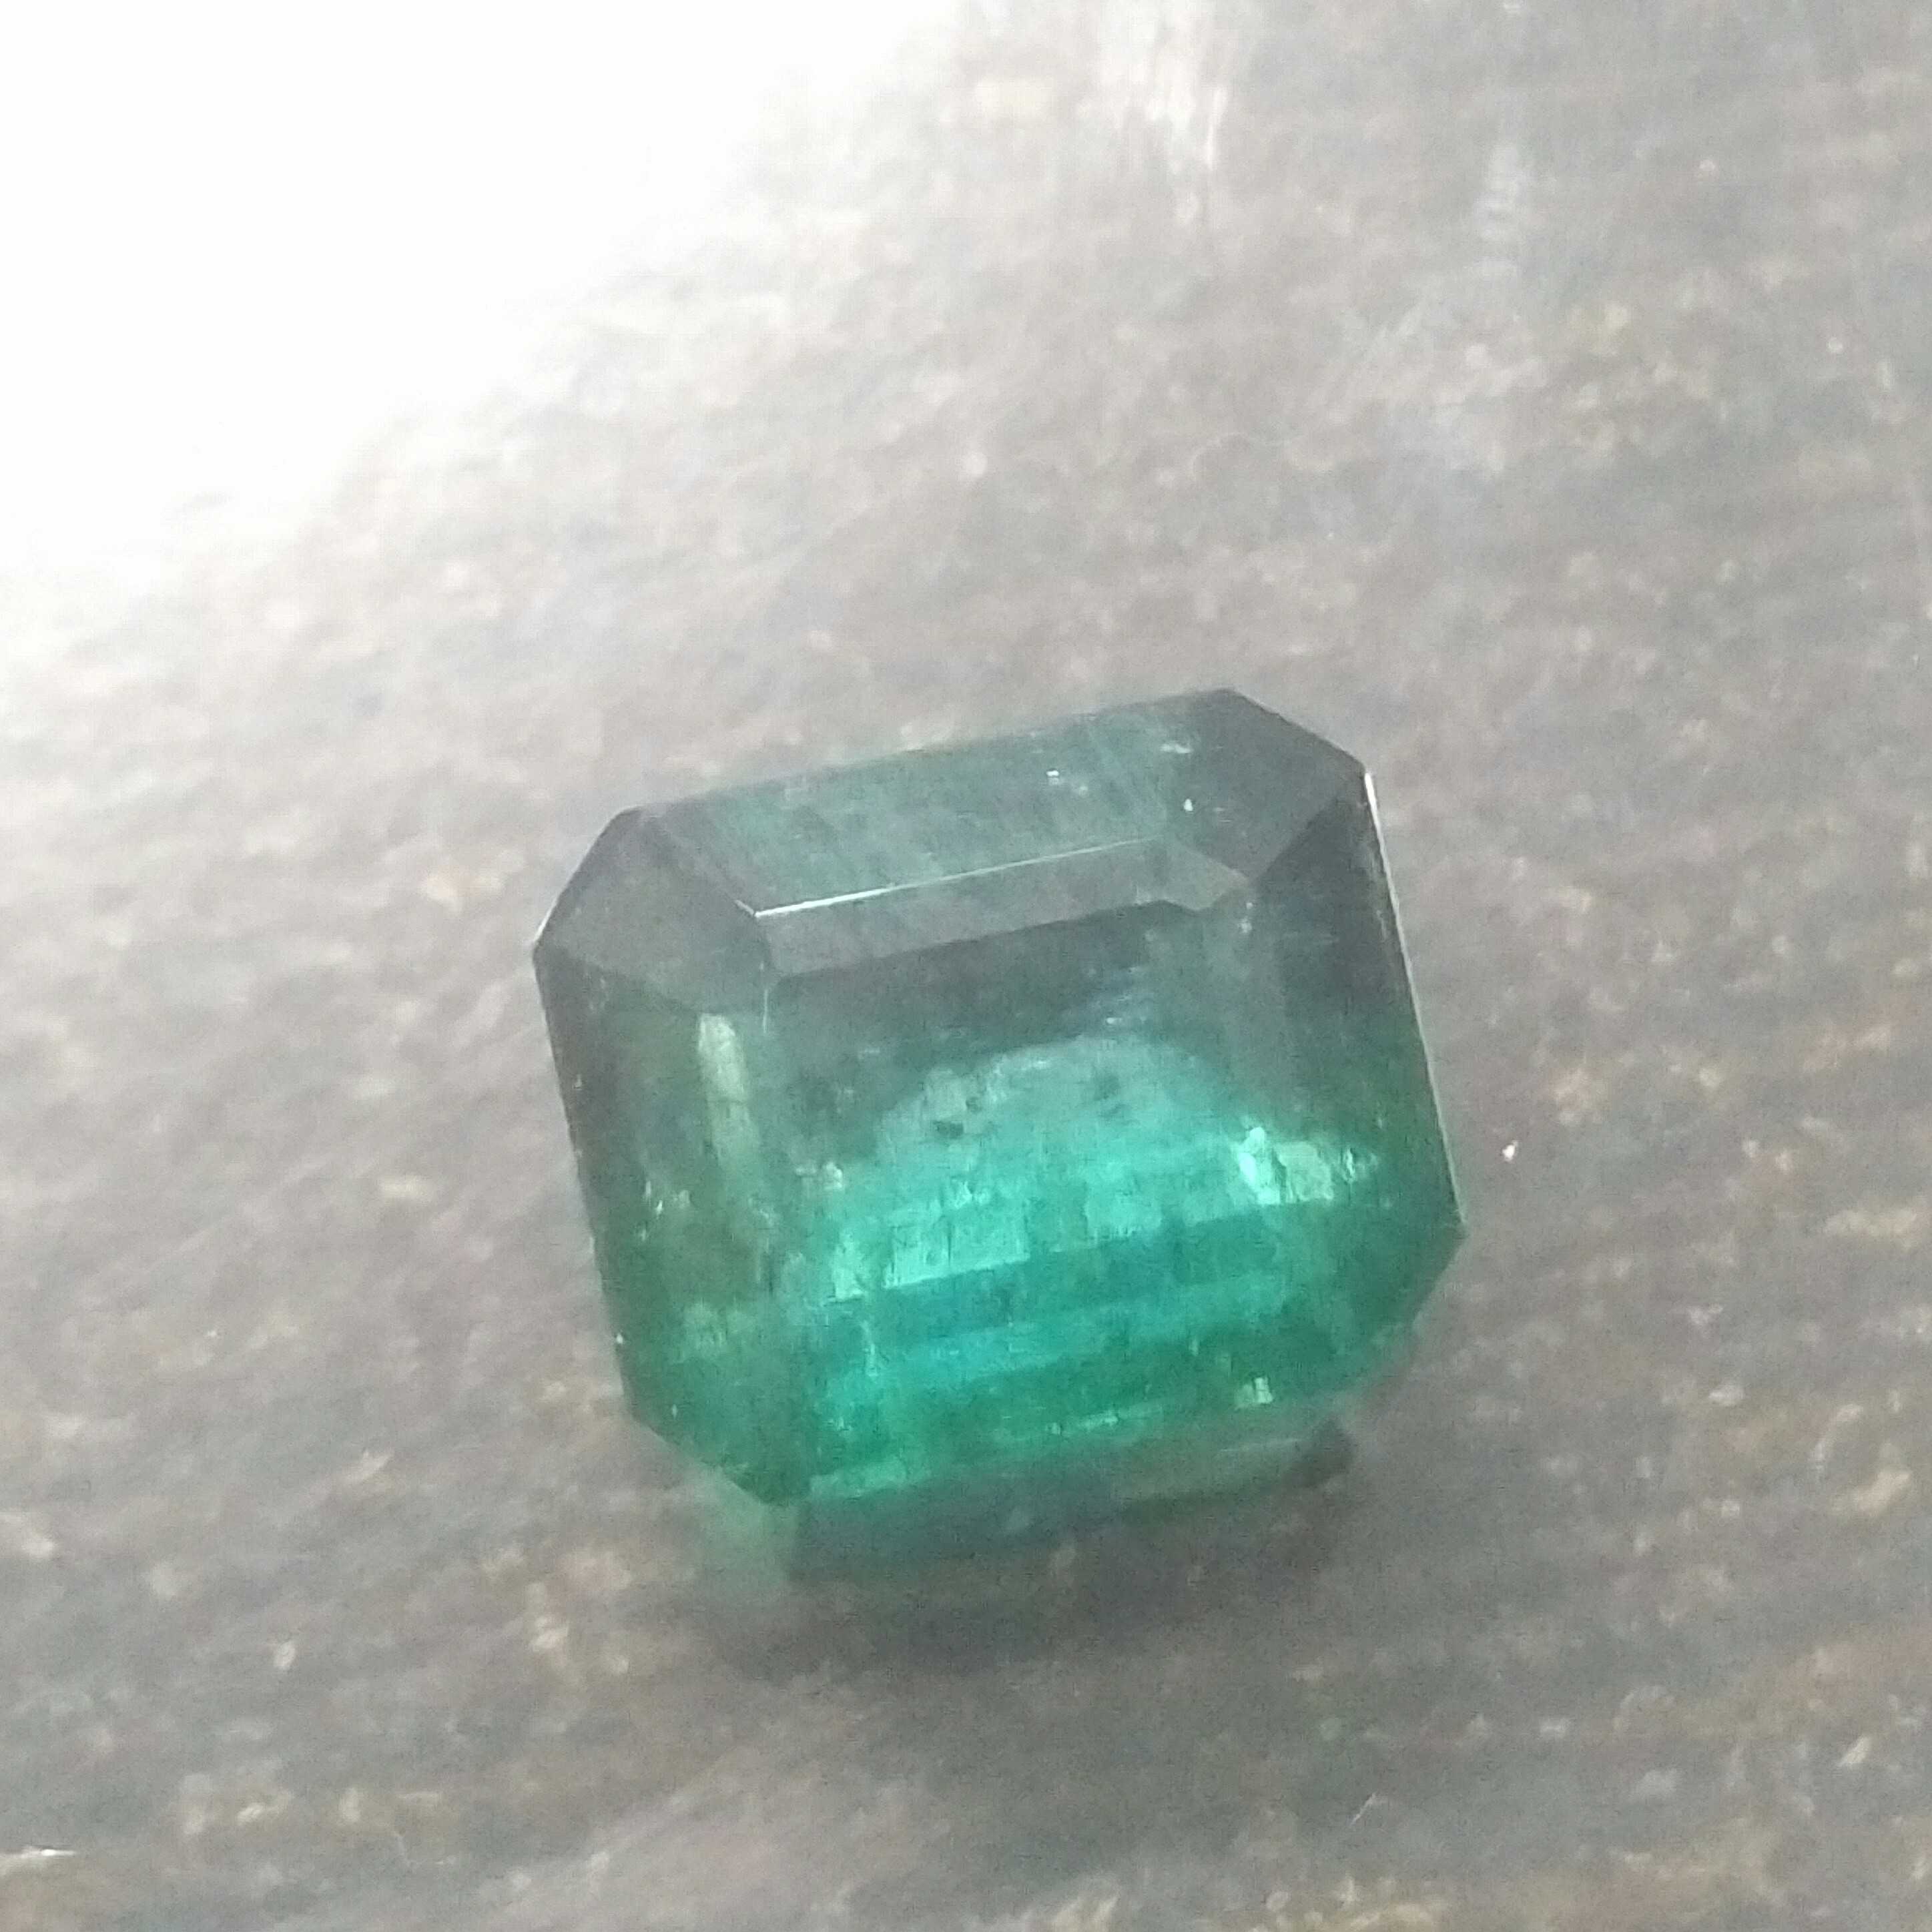 6.55ct octagon step cut deep glaas green Zambian emerald 